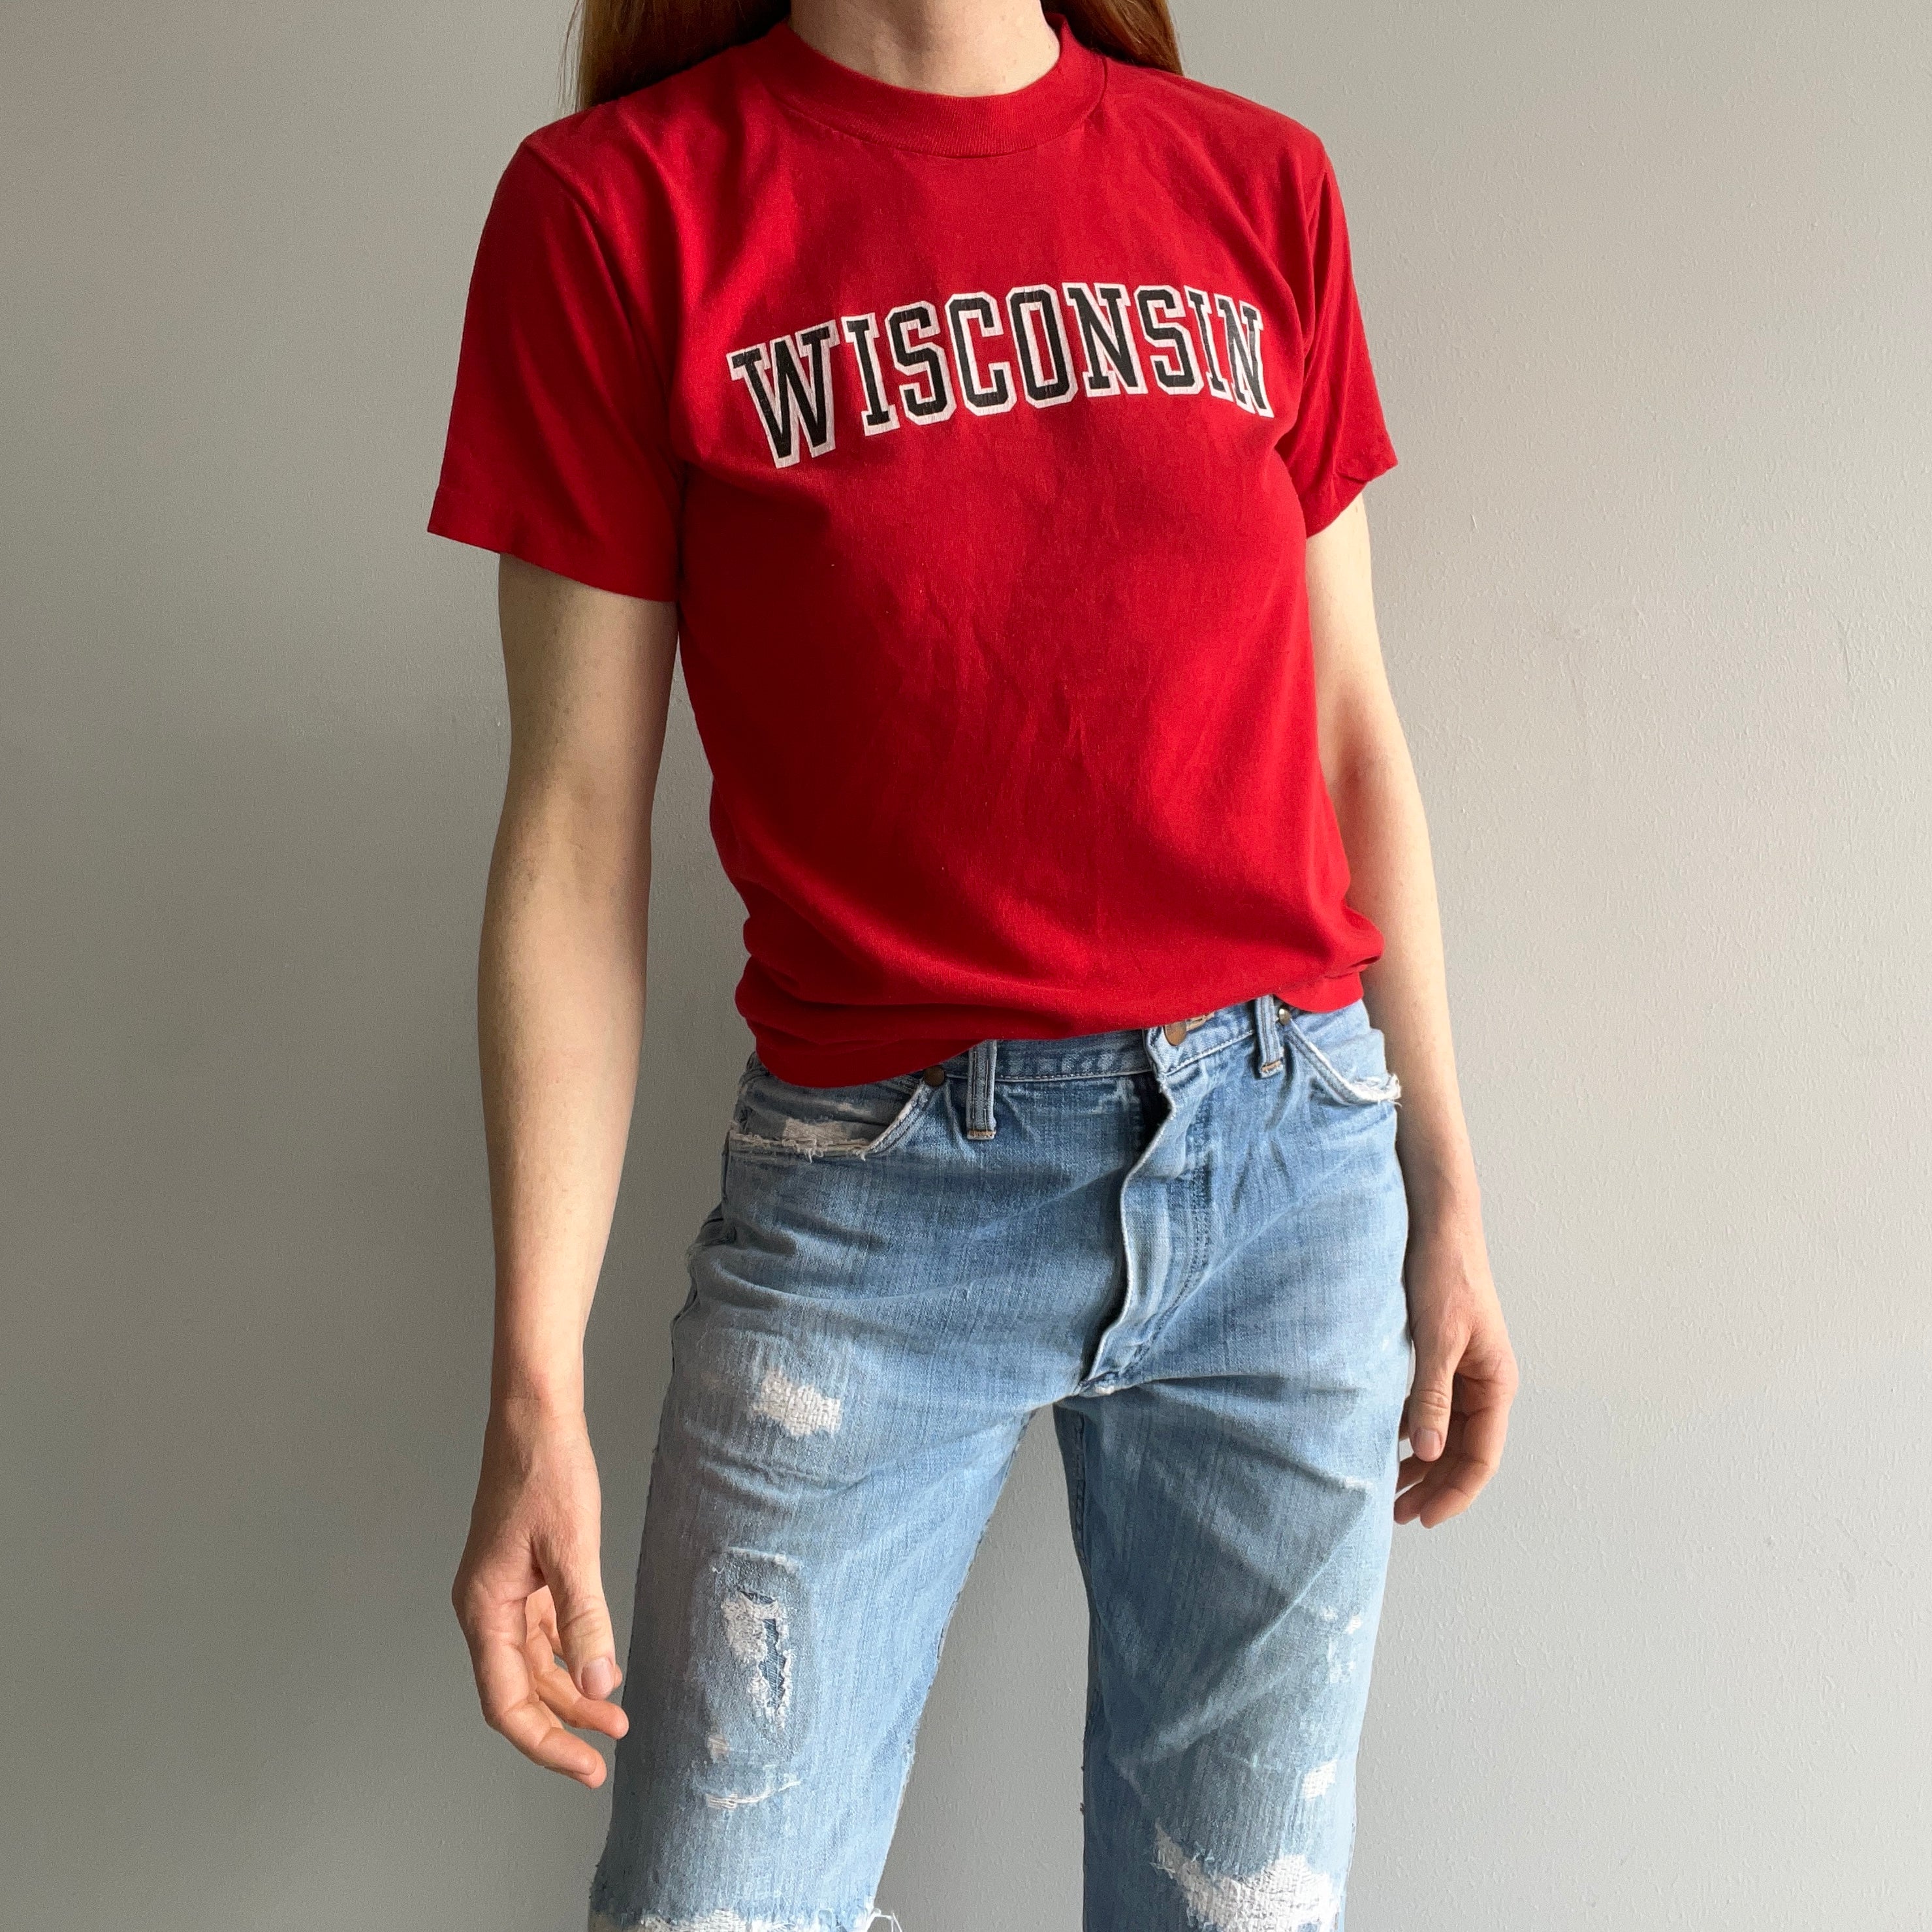 1970s Wisconsin T-Shirt by Velva Sheen